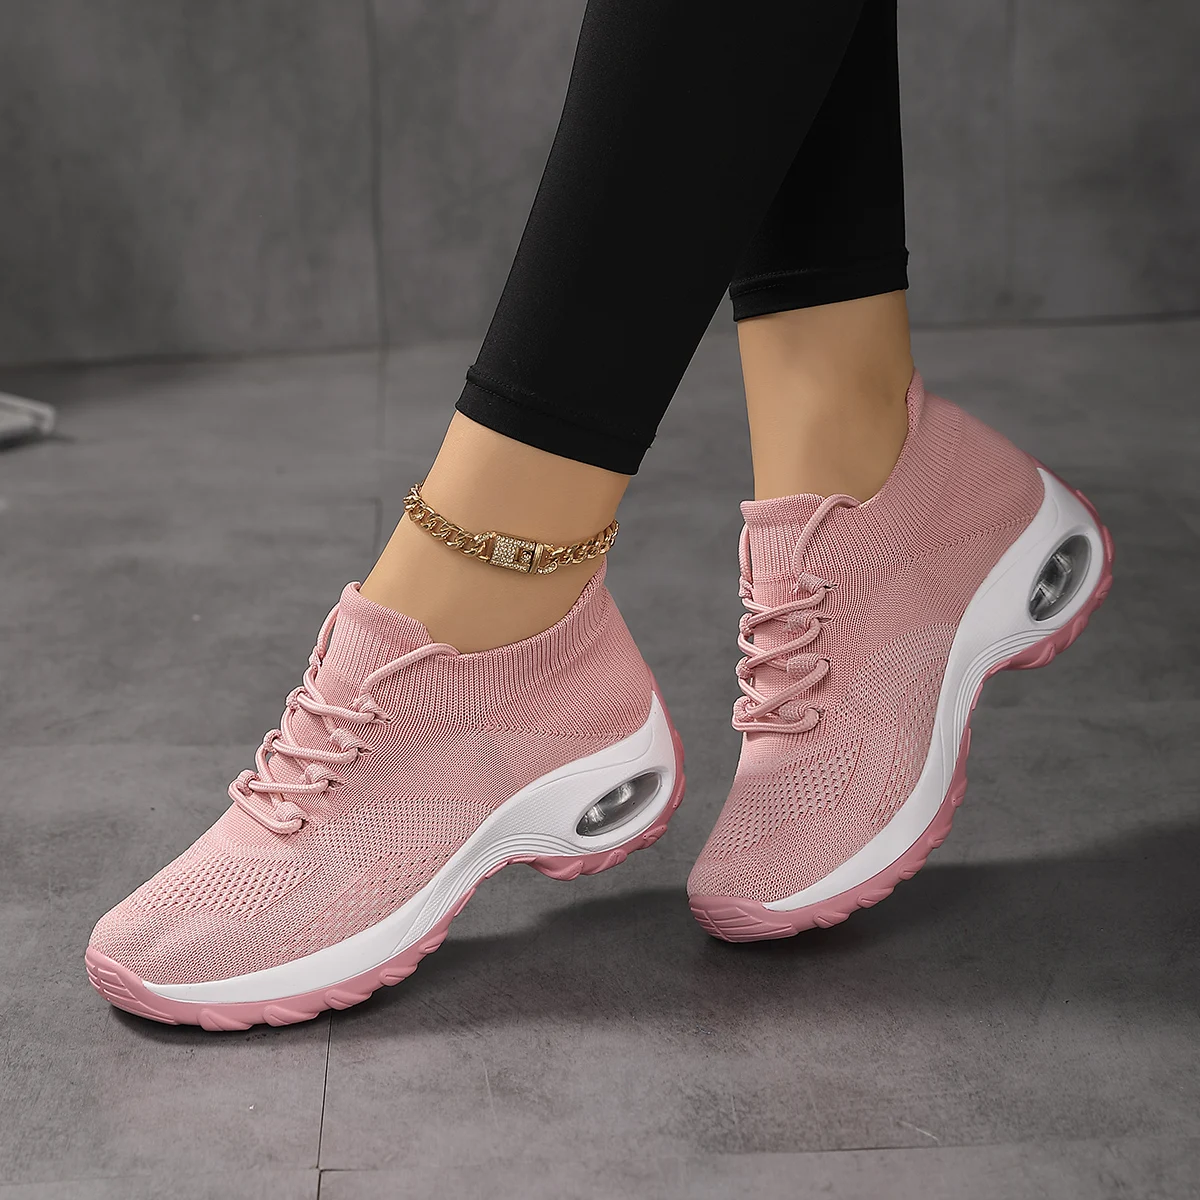 

Women's Walking Shoes Lace-on Sock Sneakers Ladies Nursing Work Barefoot Feel Air Cushion Mesh Pink Casual Running Shoes 1862